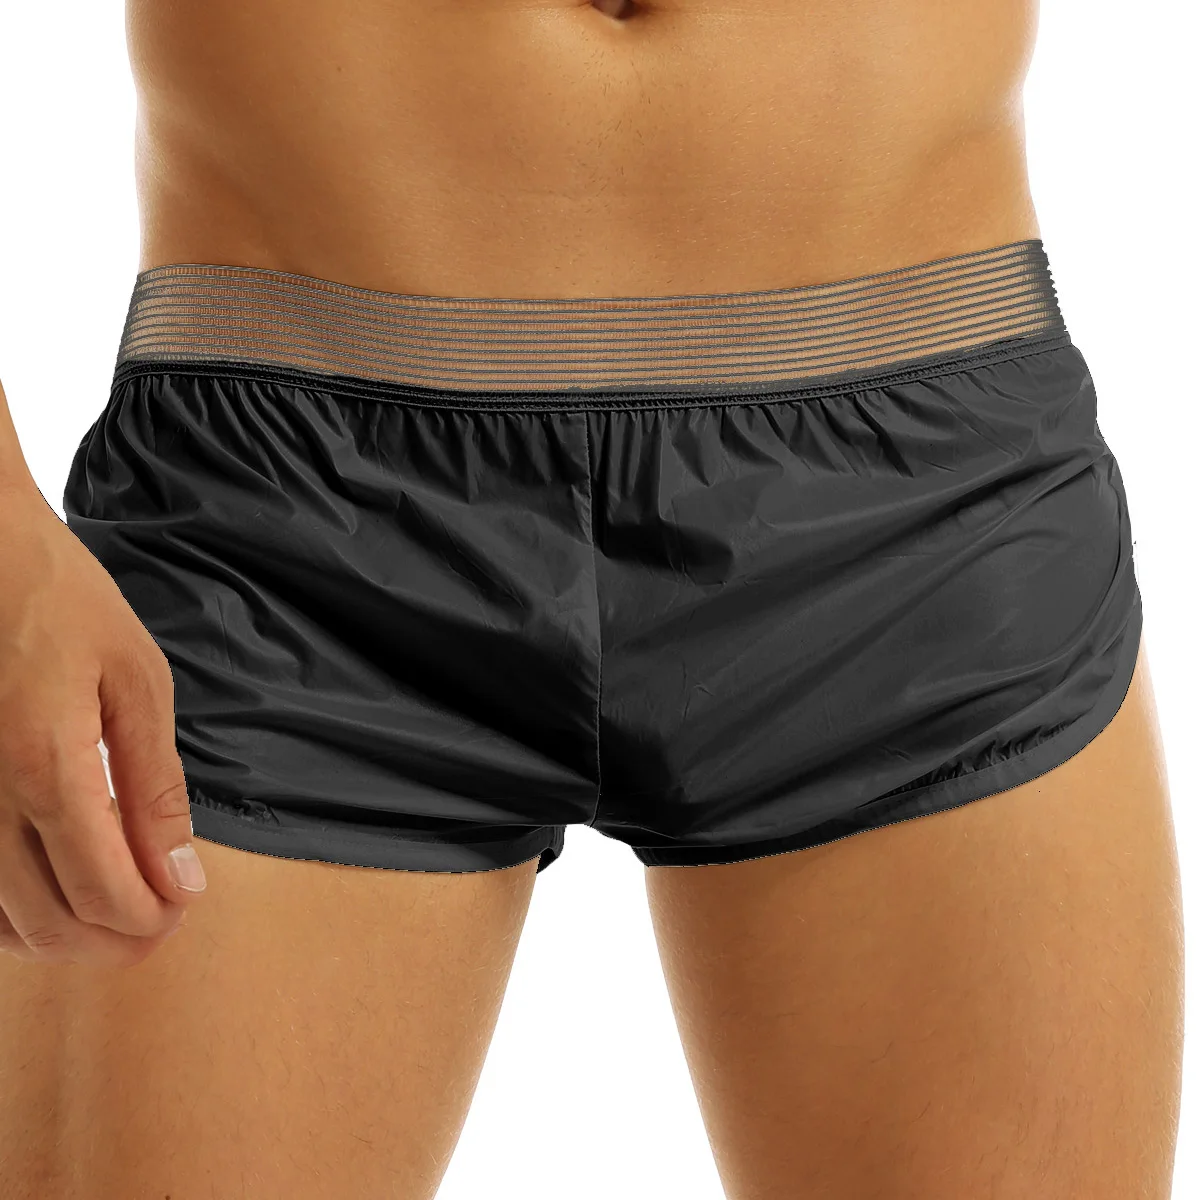 Freebily Mens Faux Leather Side Split Boxer Briefs Gym Sports Shorts Swim Trunks Underpants 